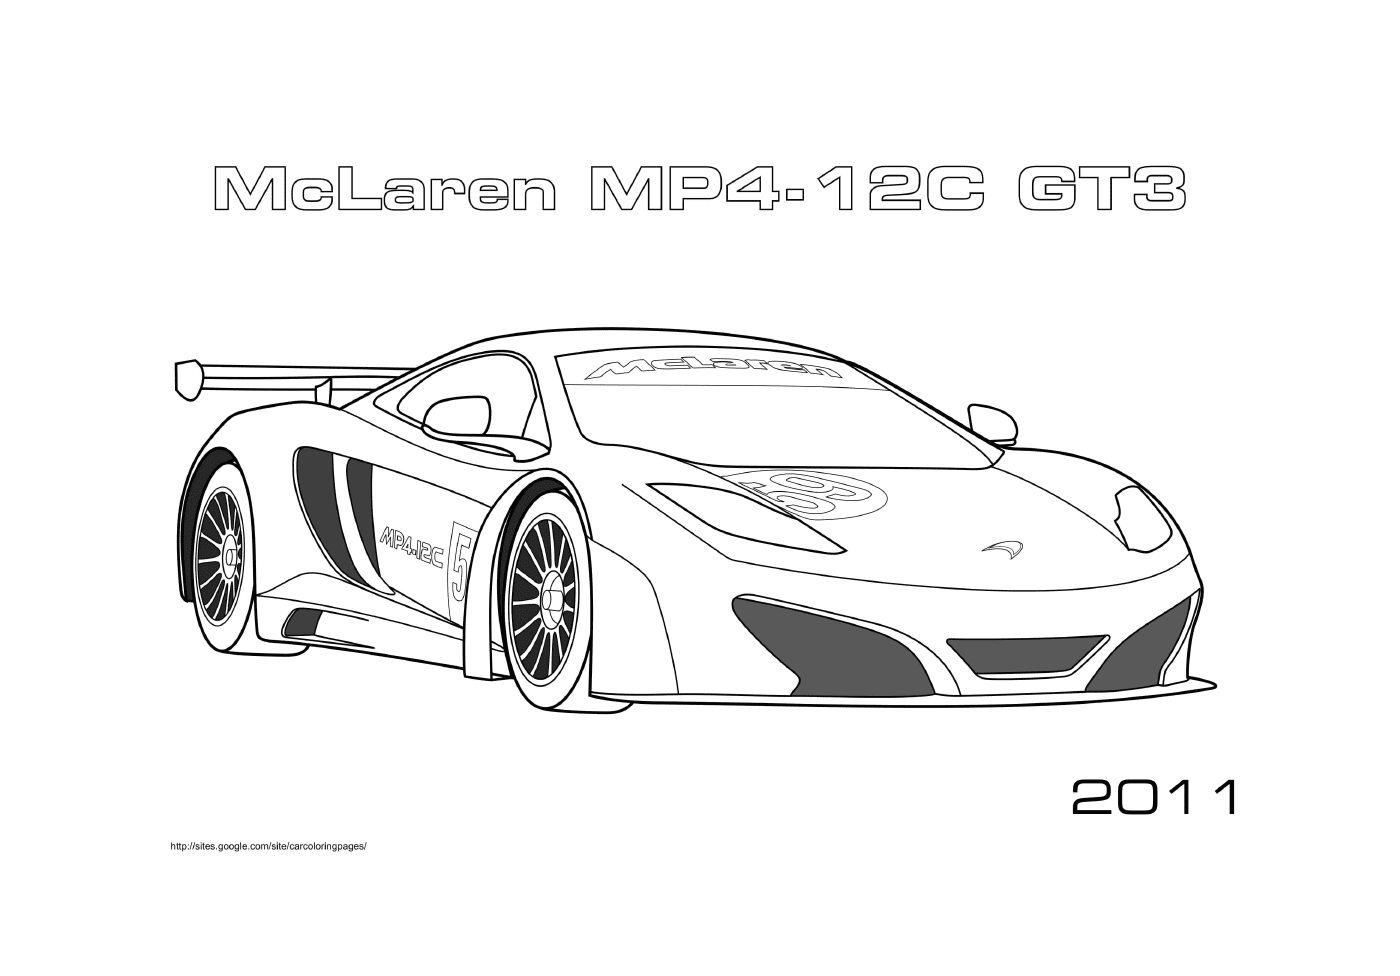  2011年McLaren MP4-12C GT3 